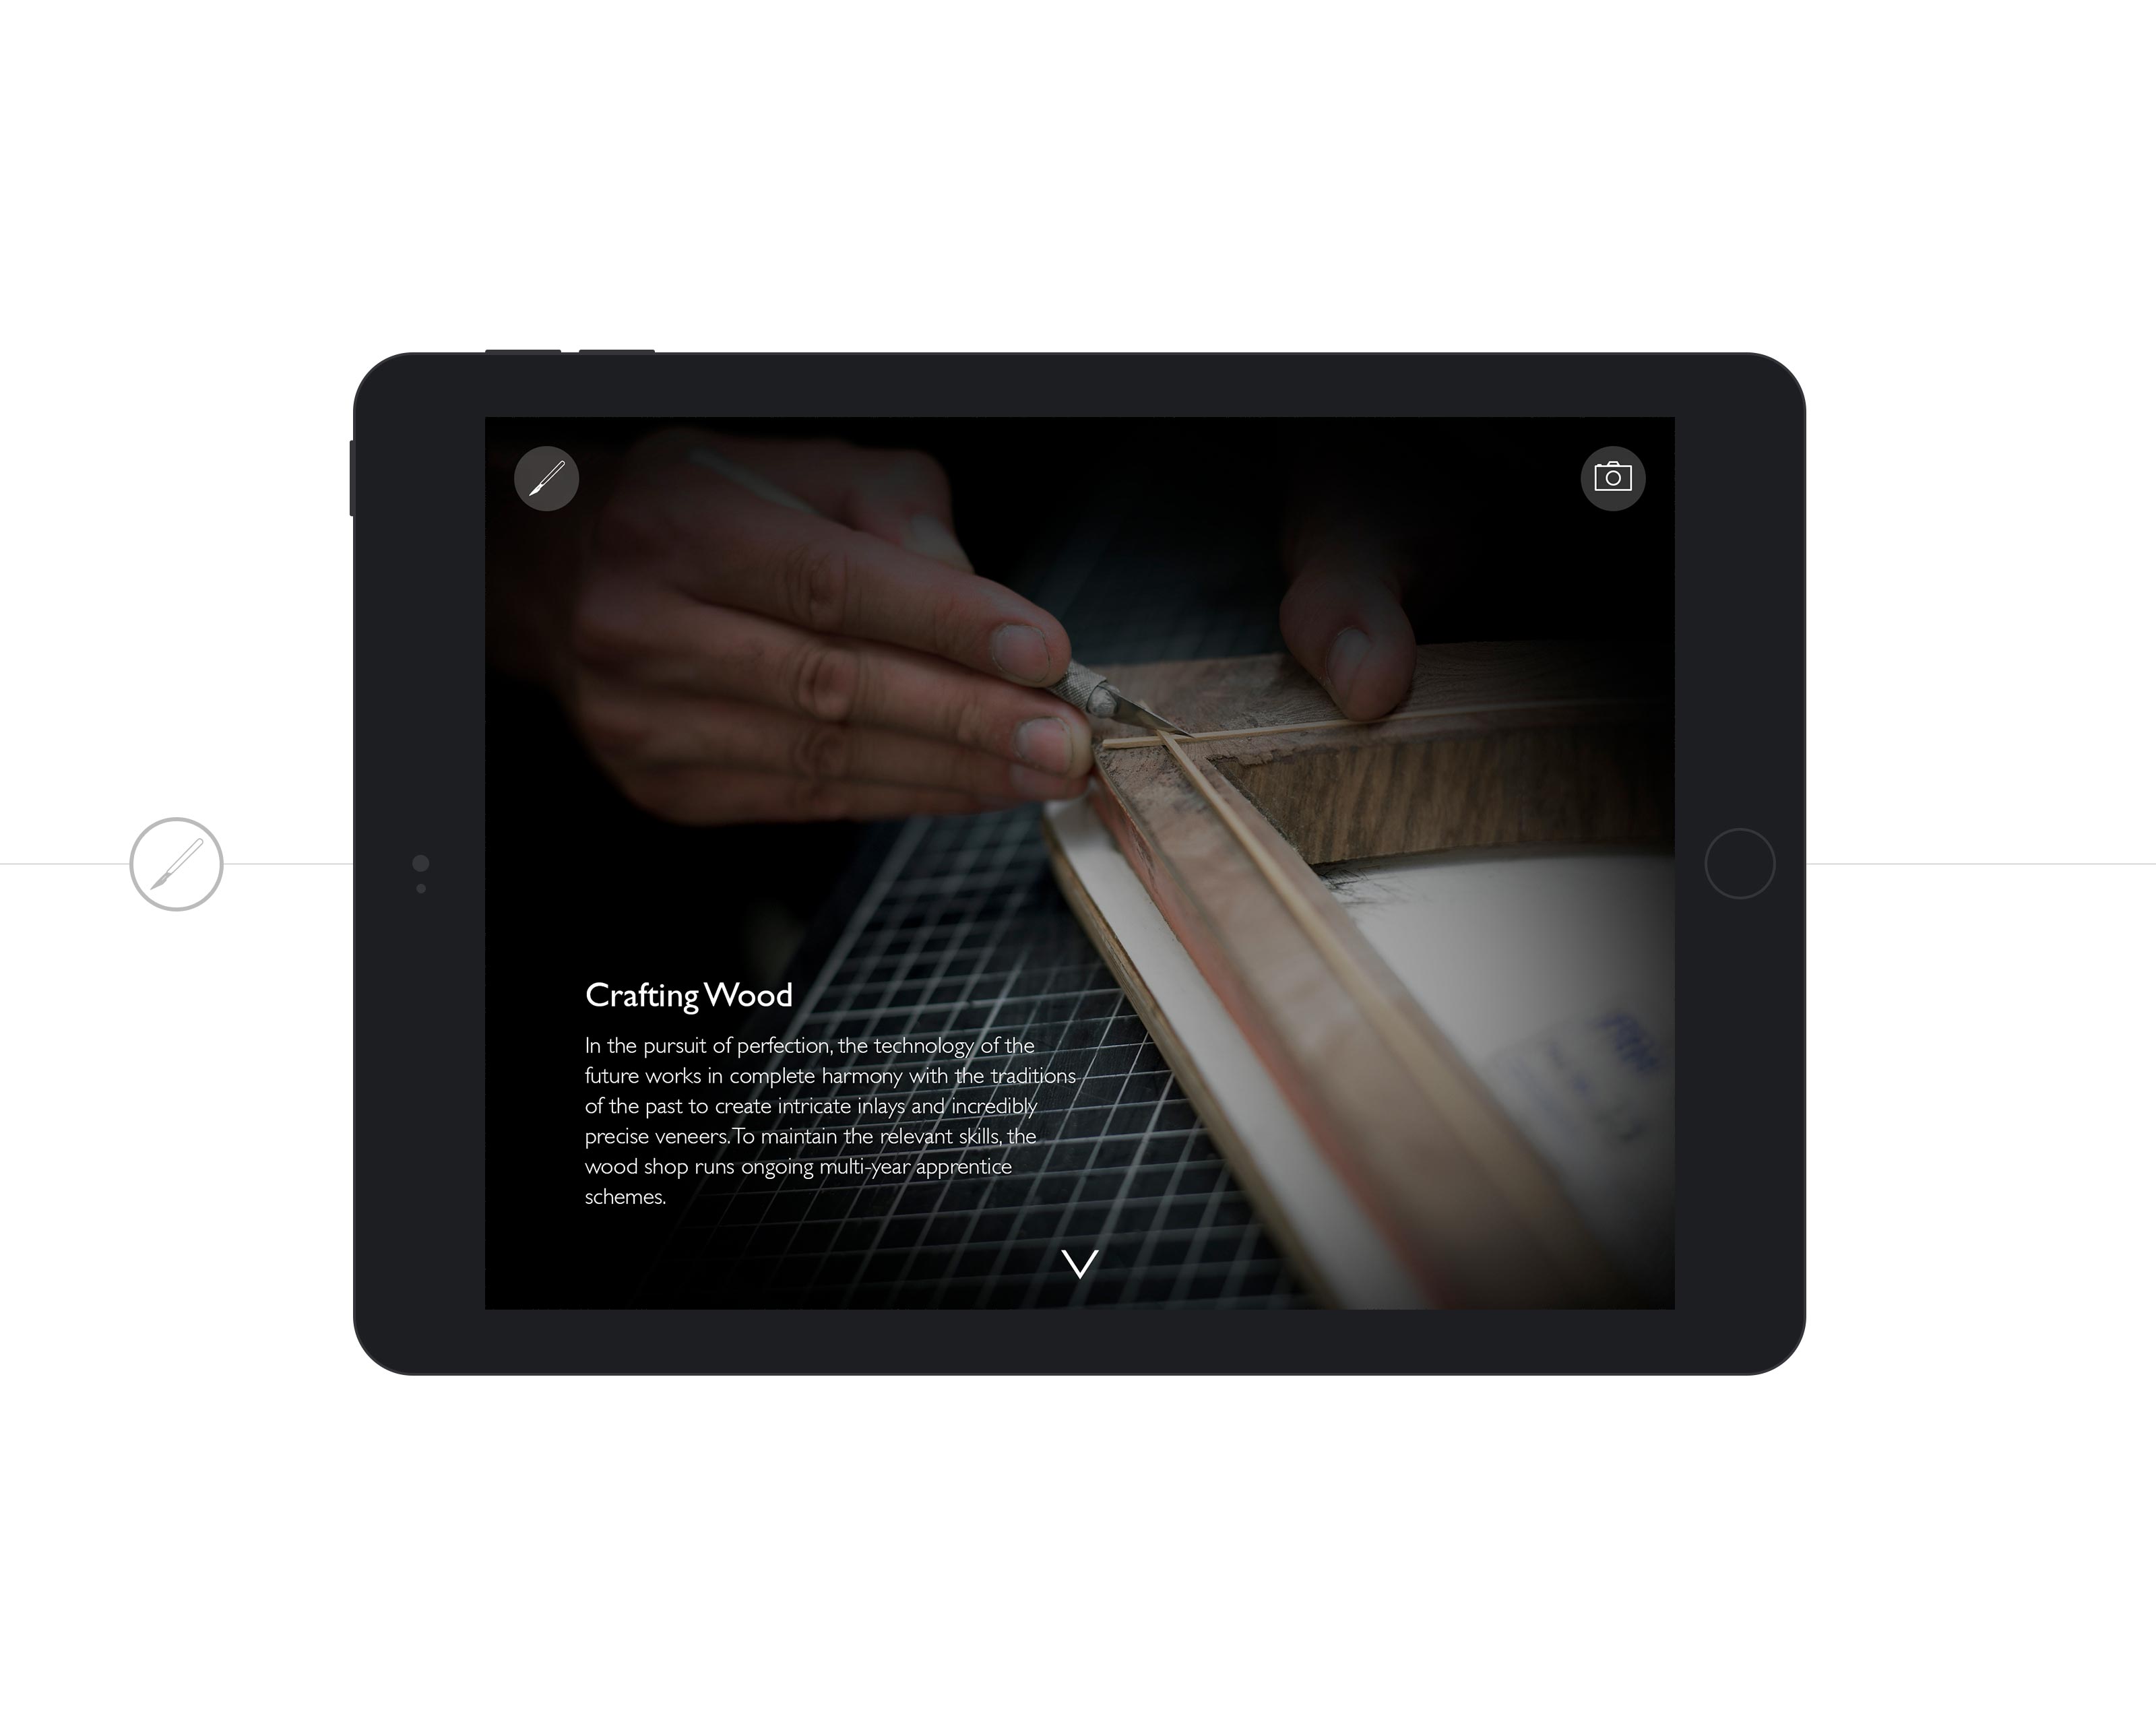 rolls-royce-tablet-crafting-wood_01